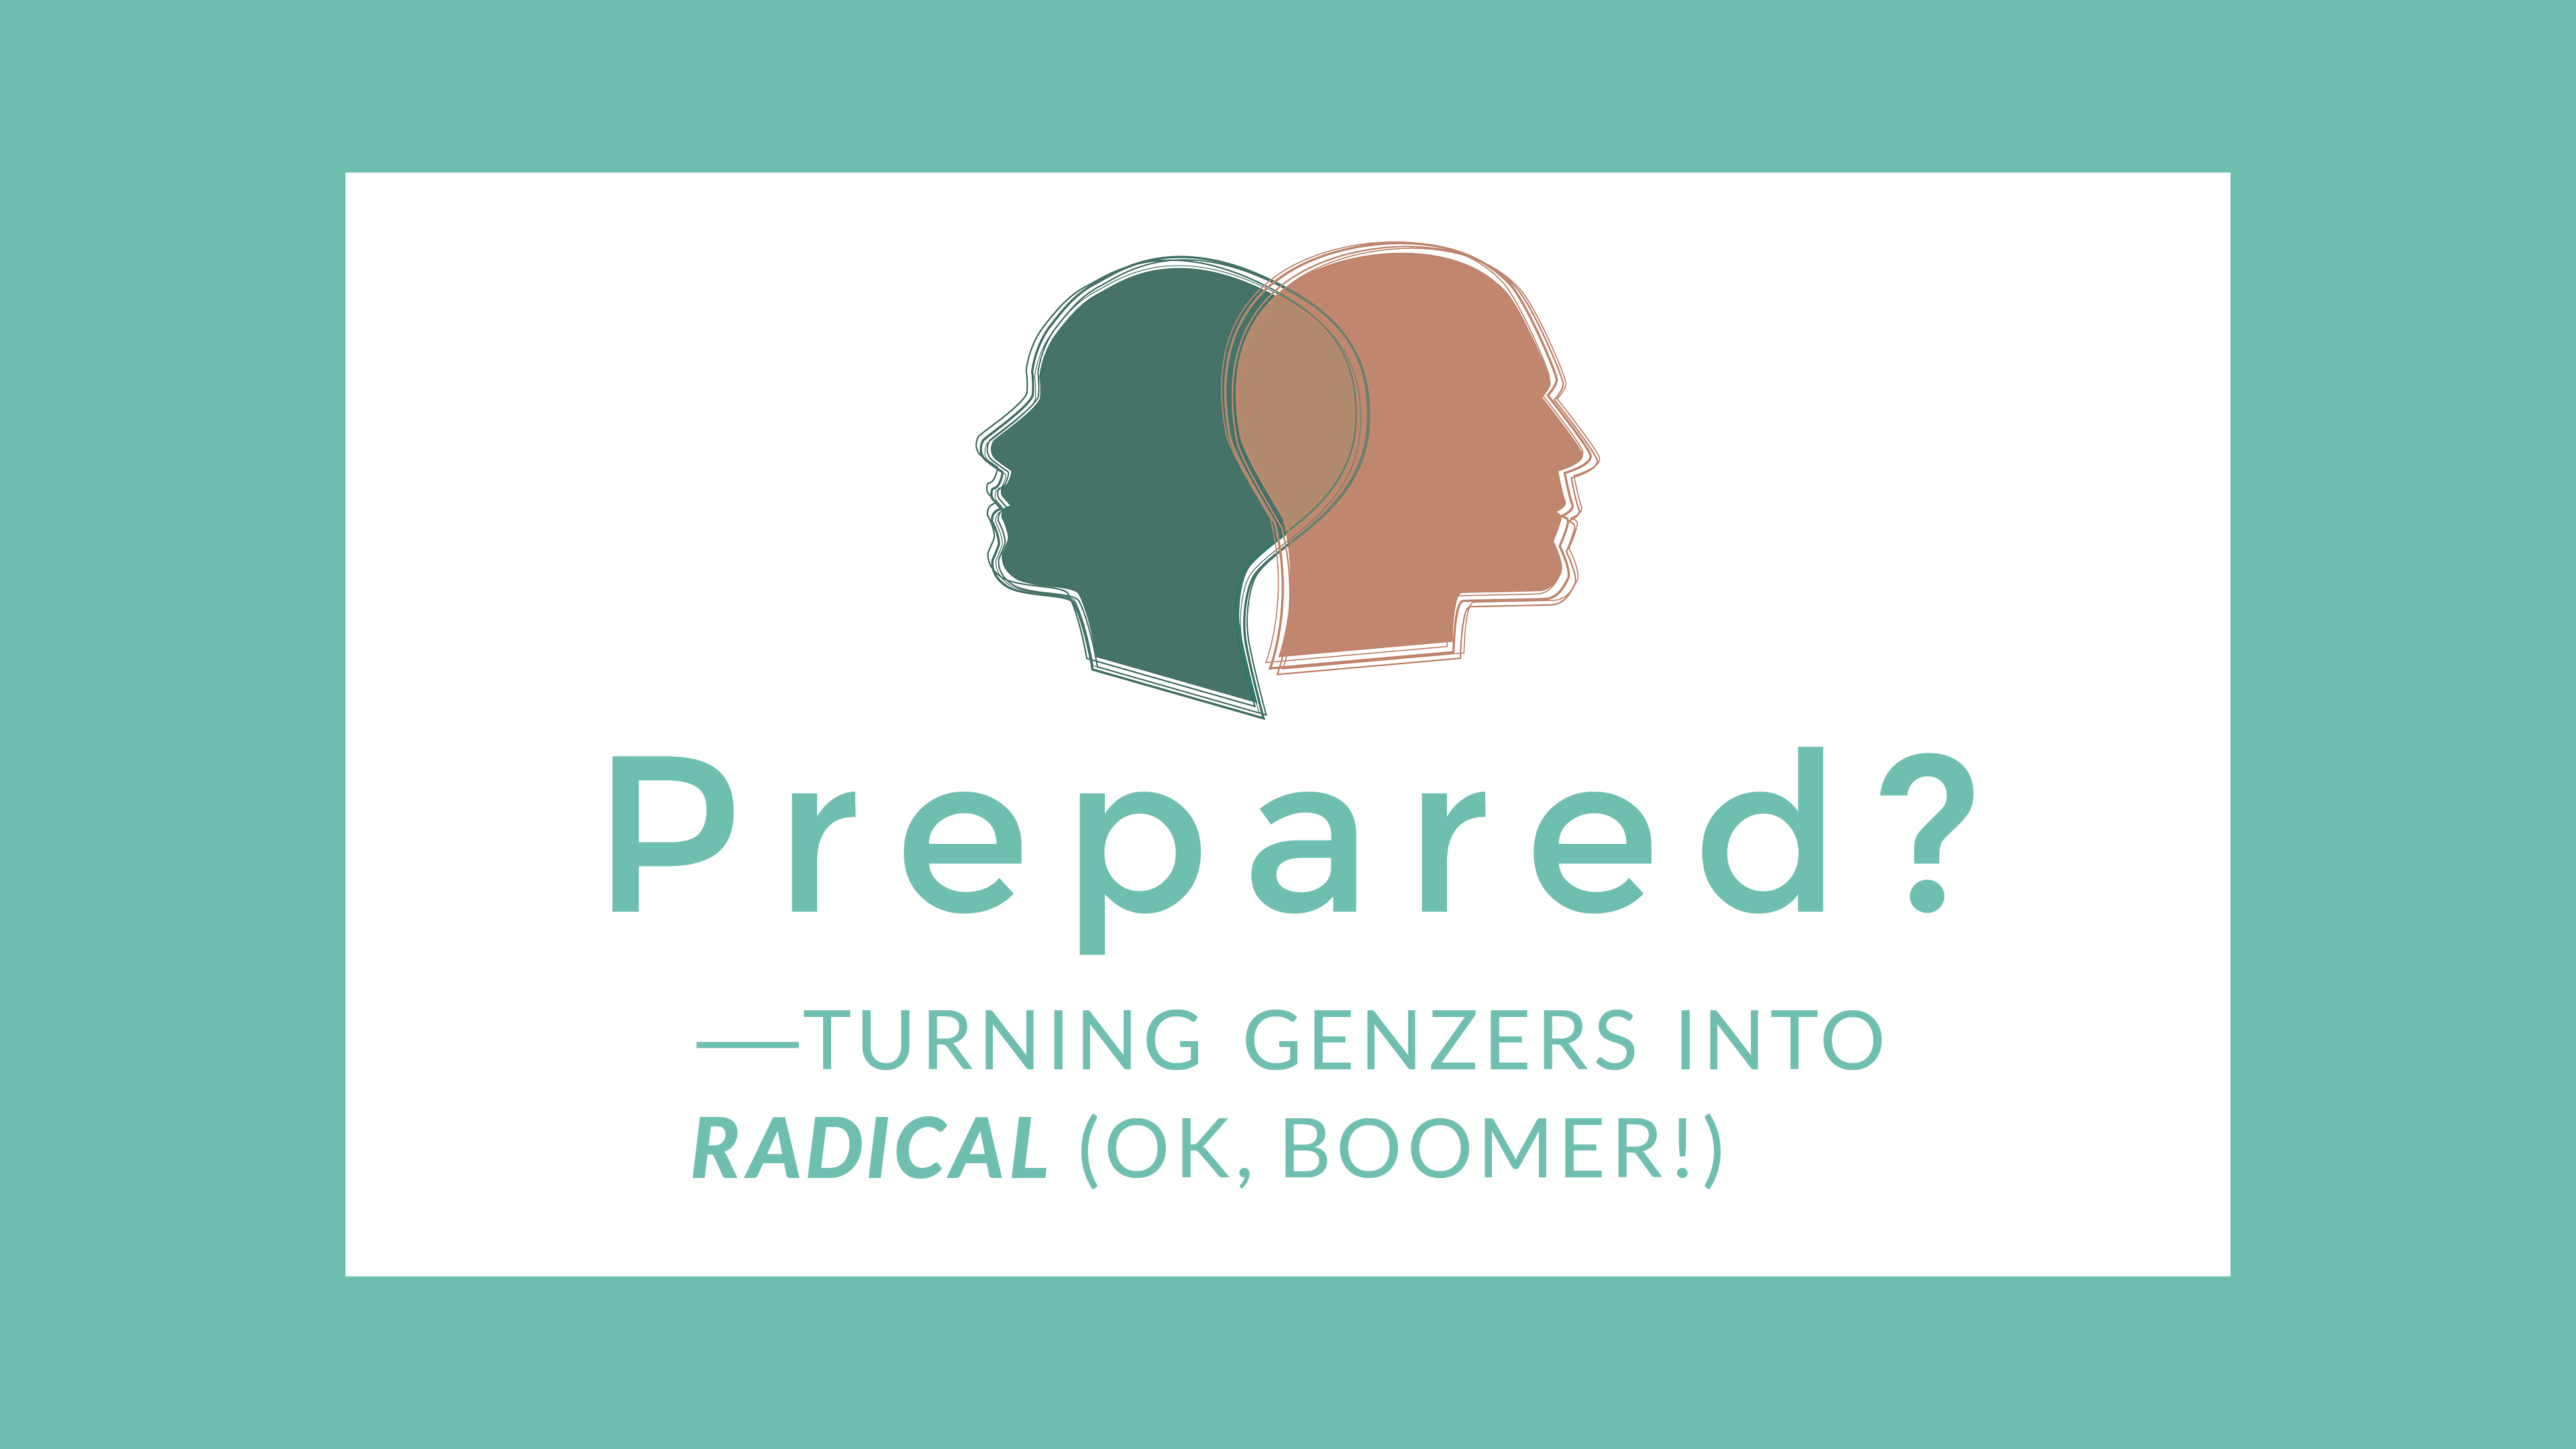 Turning GenZers into Radical (OK, Boomer!)